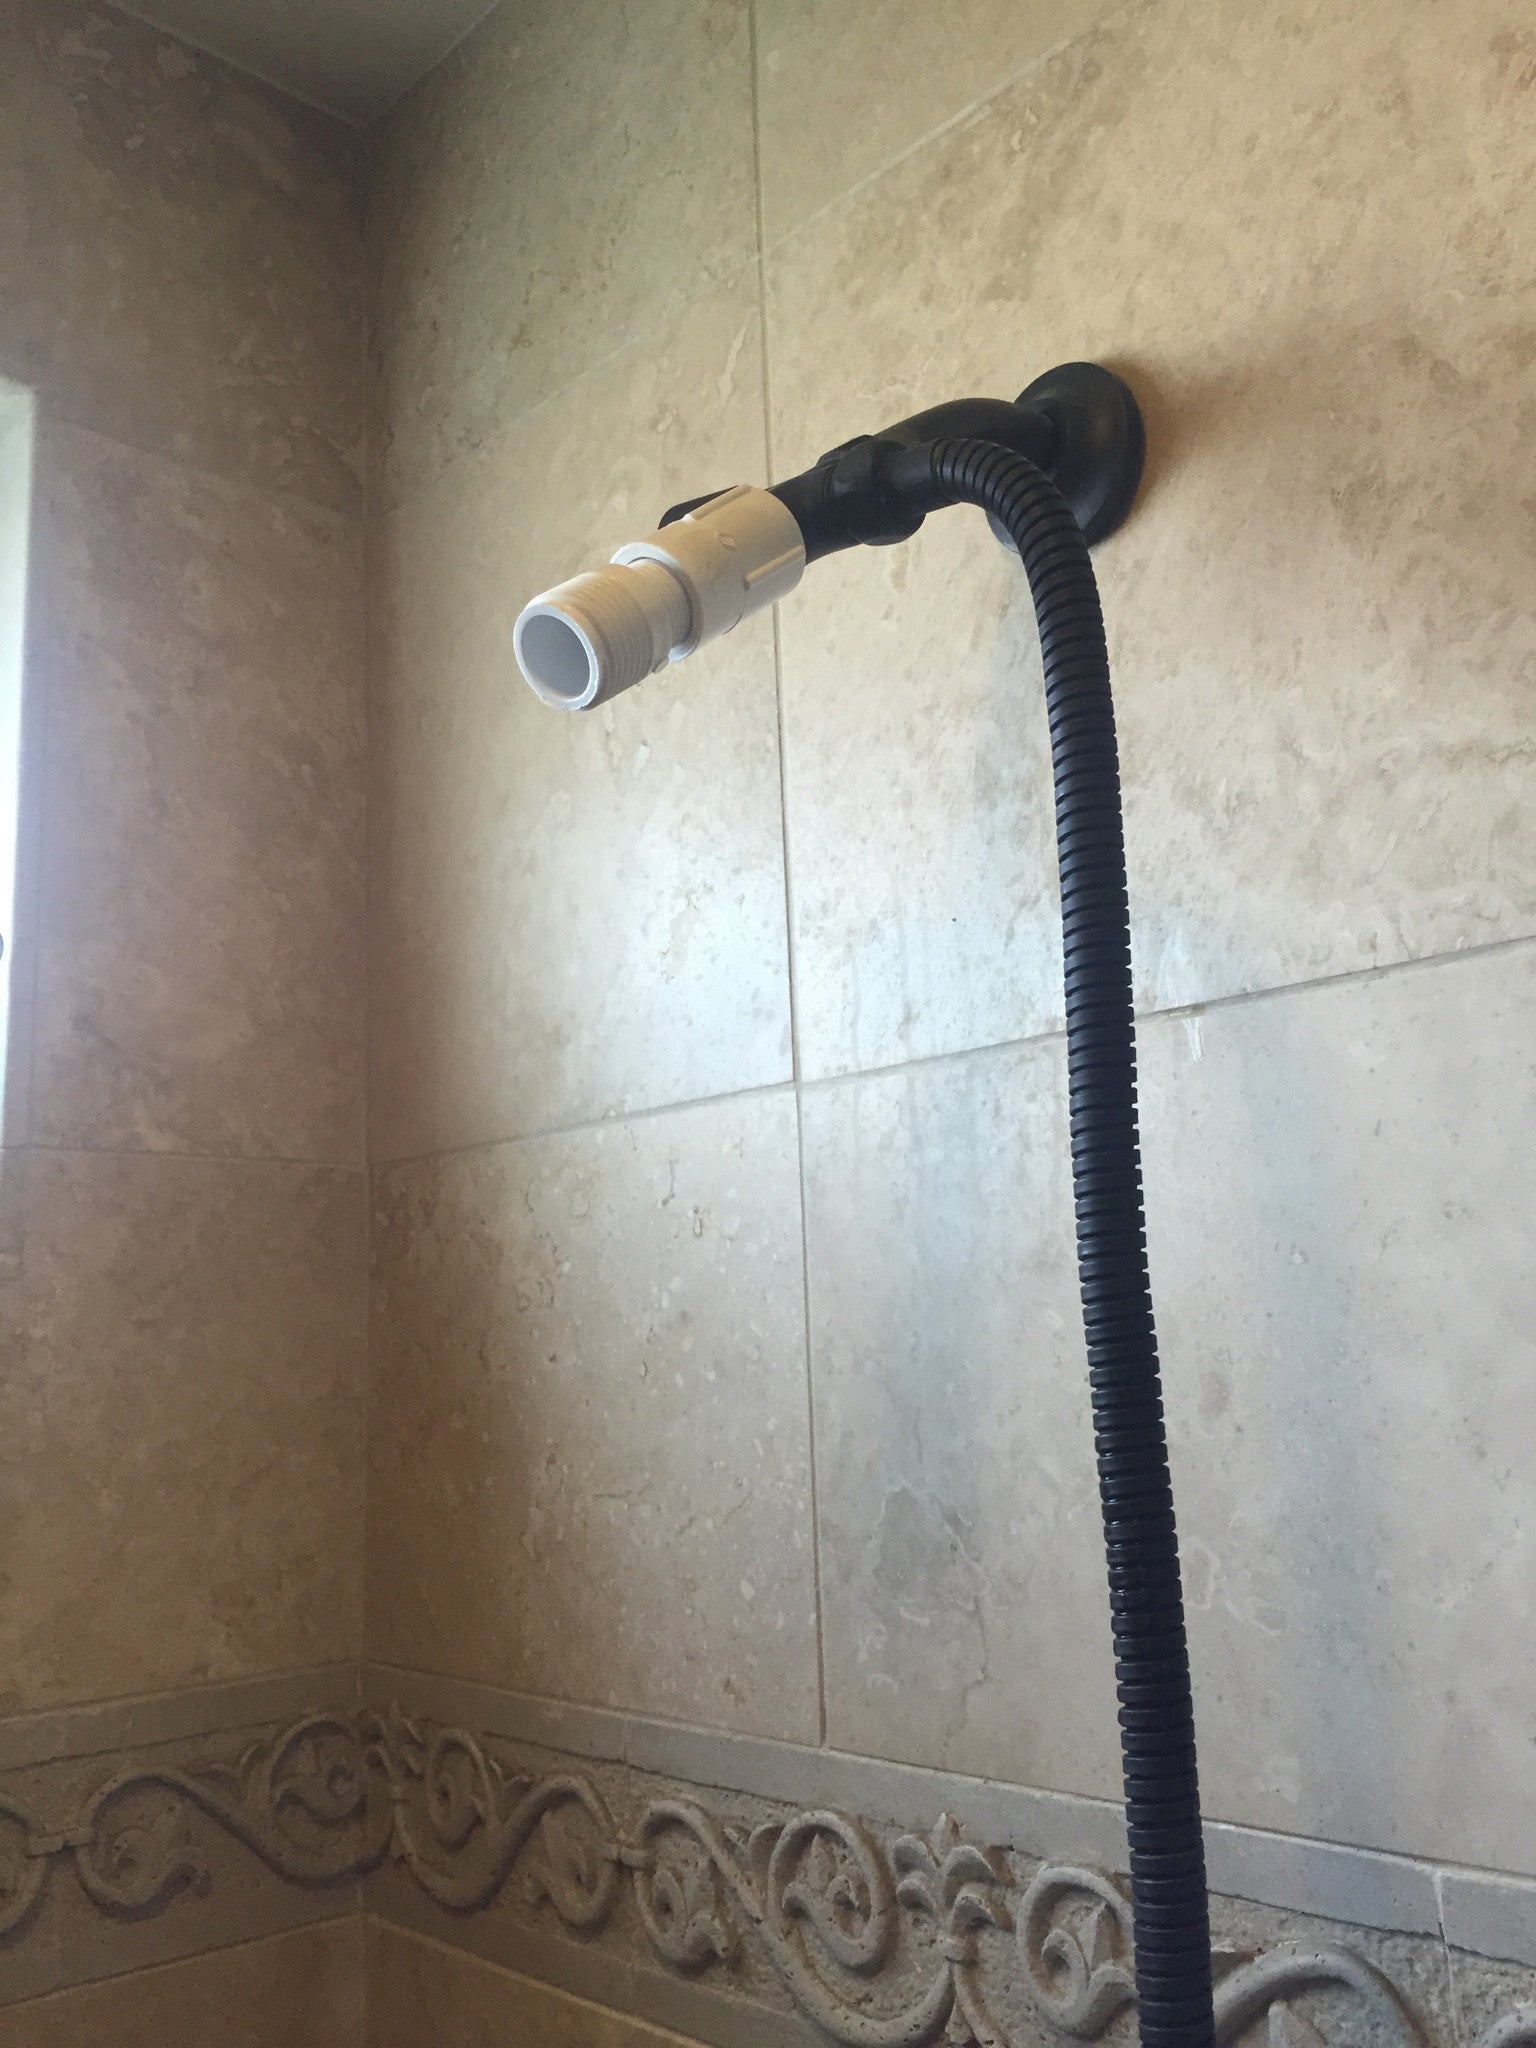 Hose / Shower Faucet Adapter